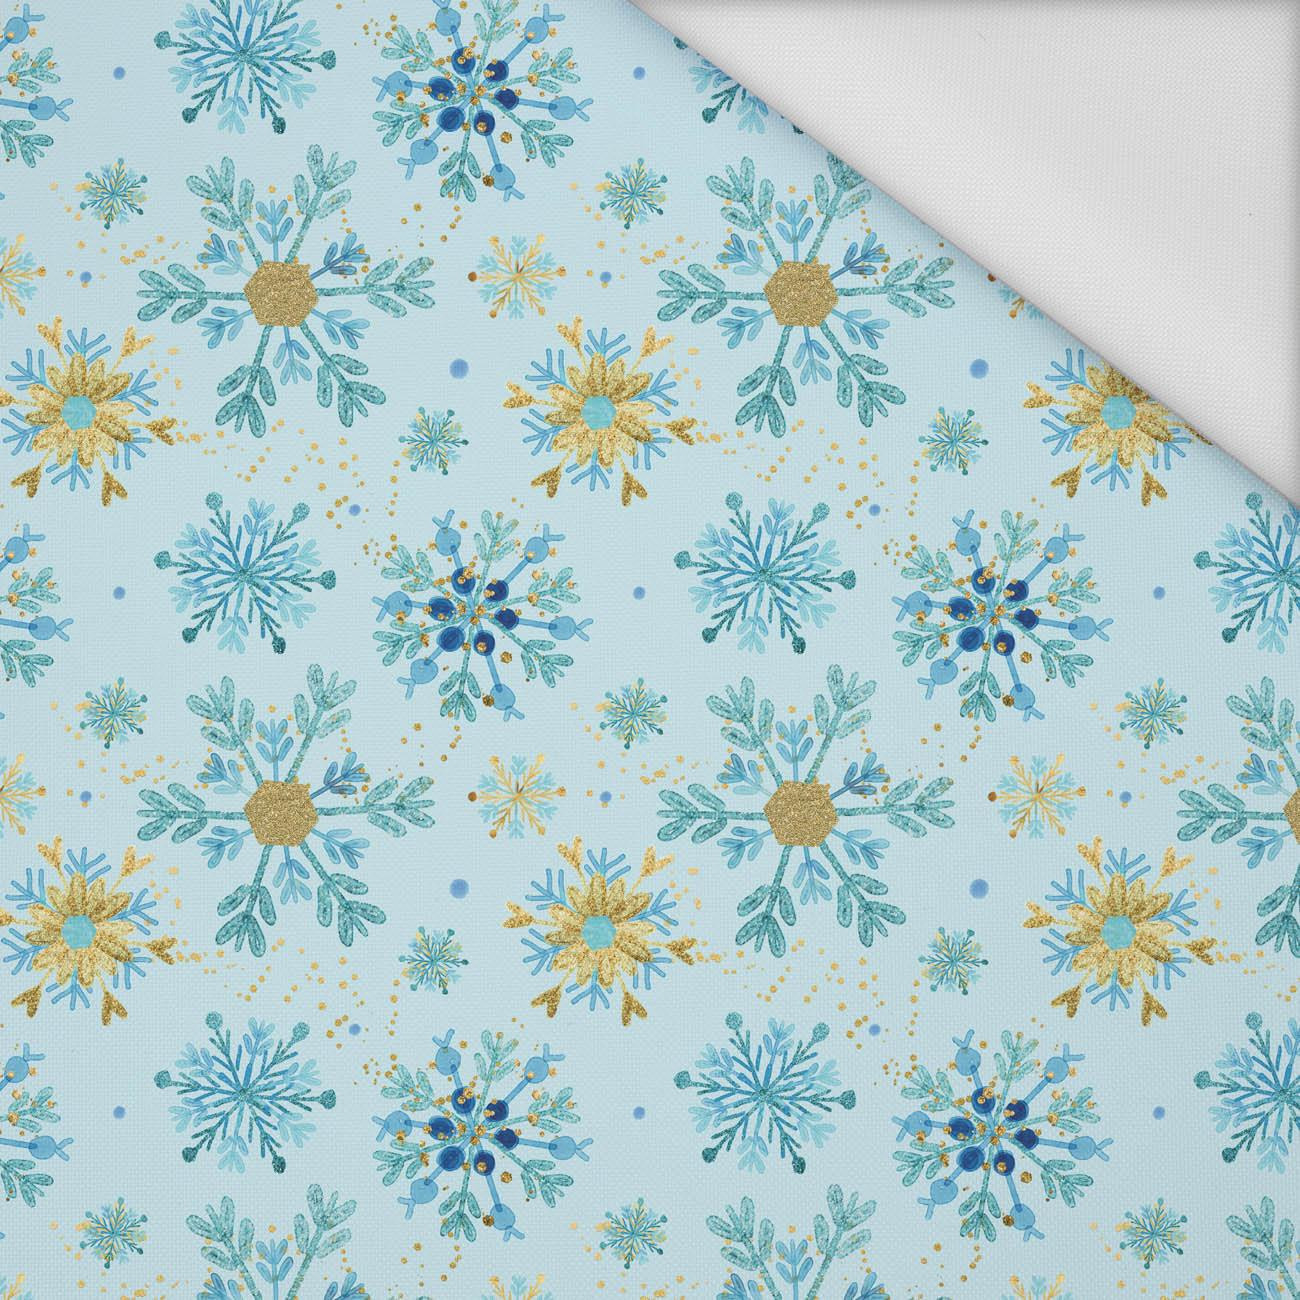 BLUE SNOWFLAKES pat. 3 - Waterproof woven fabric